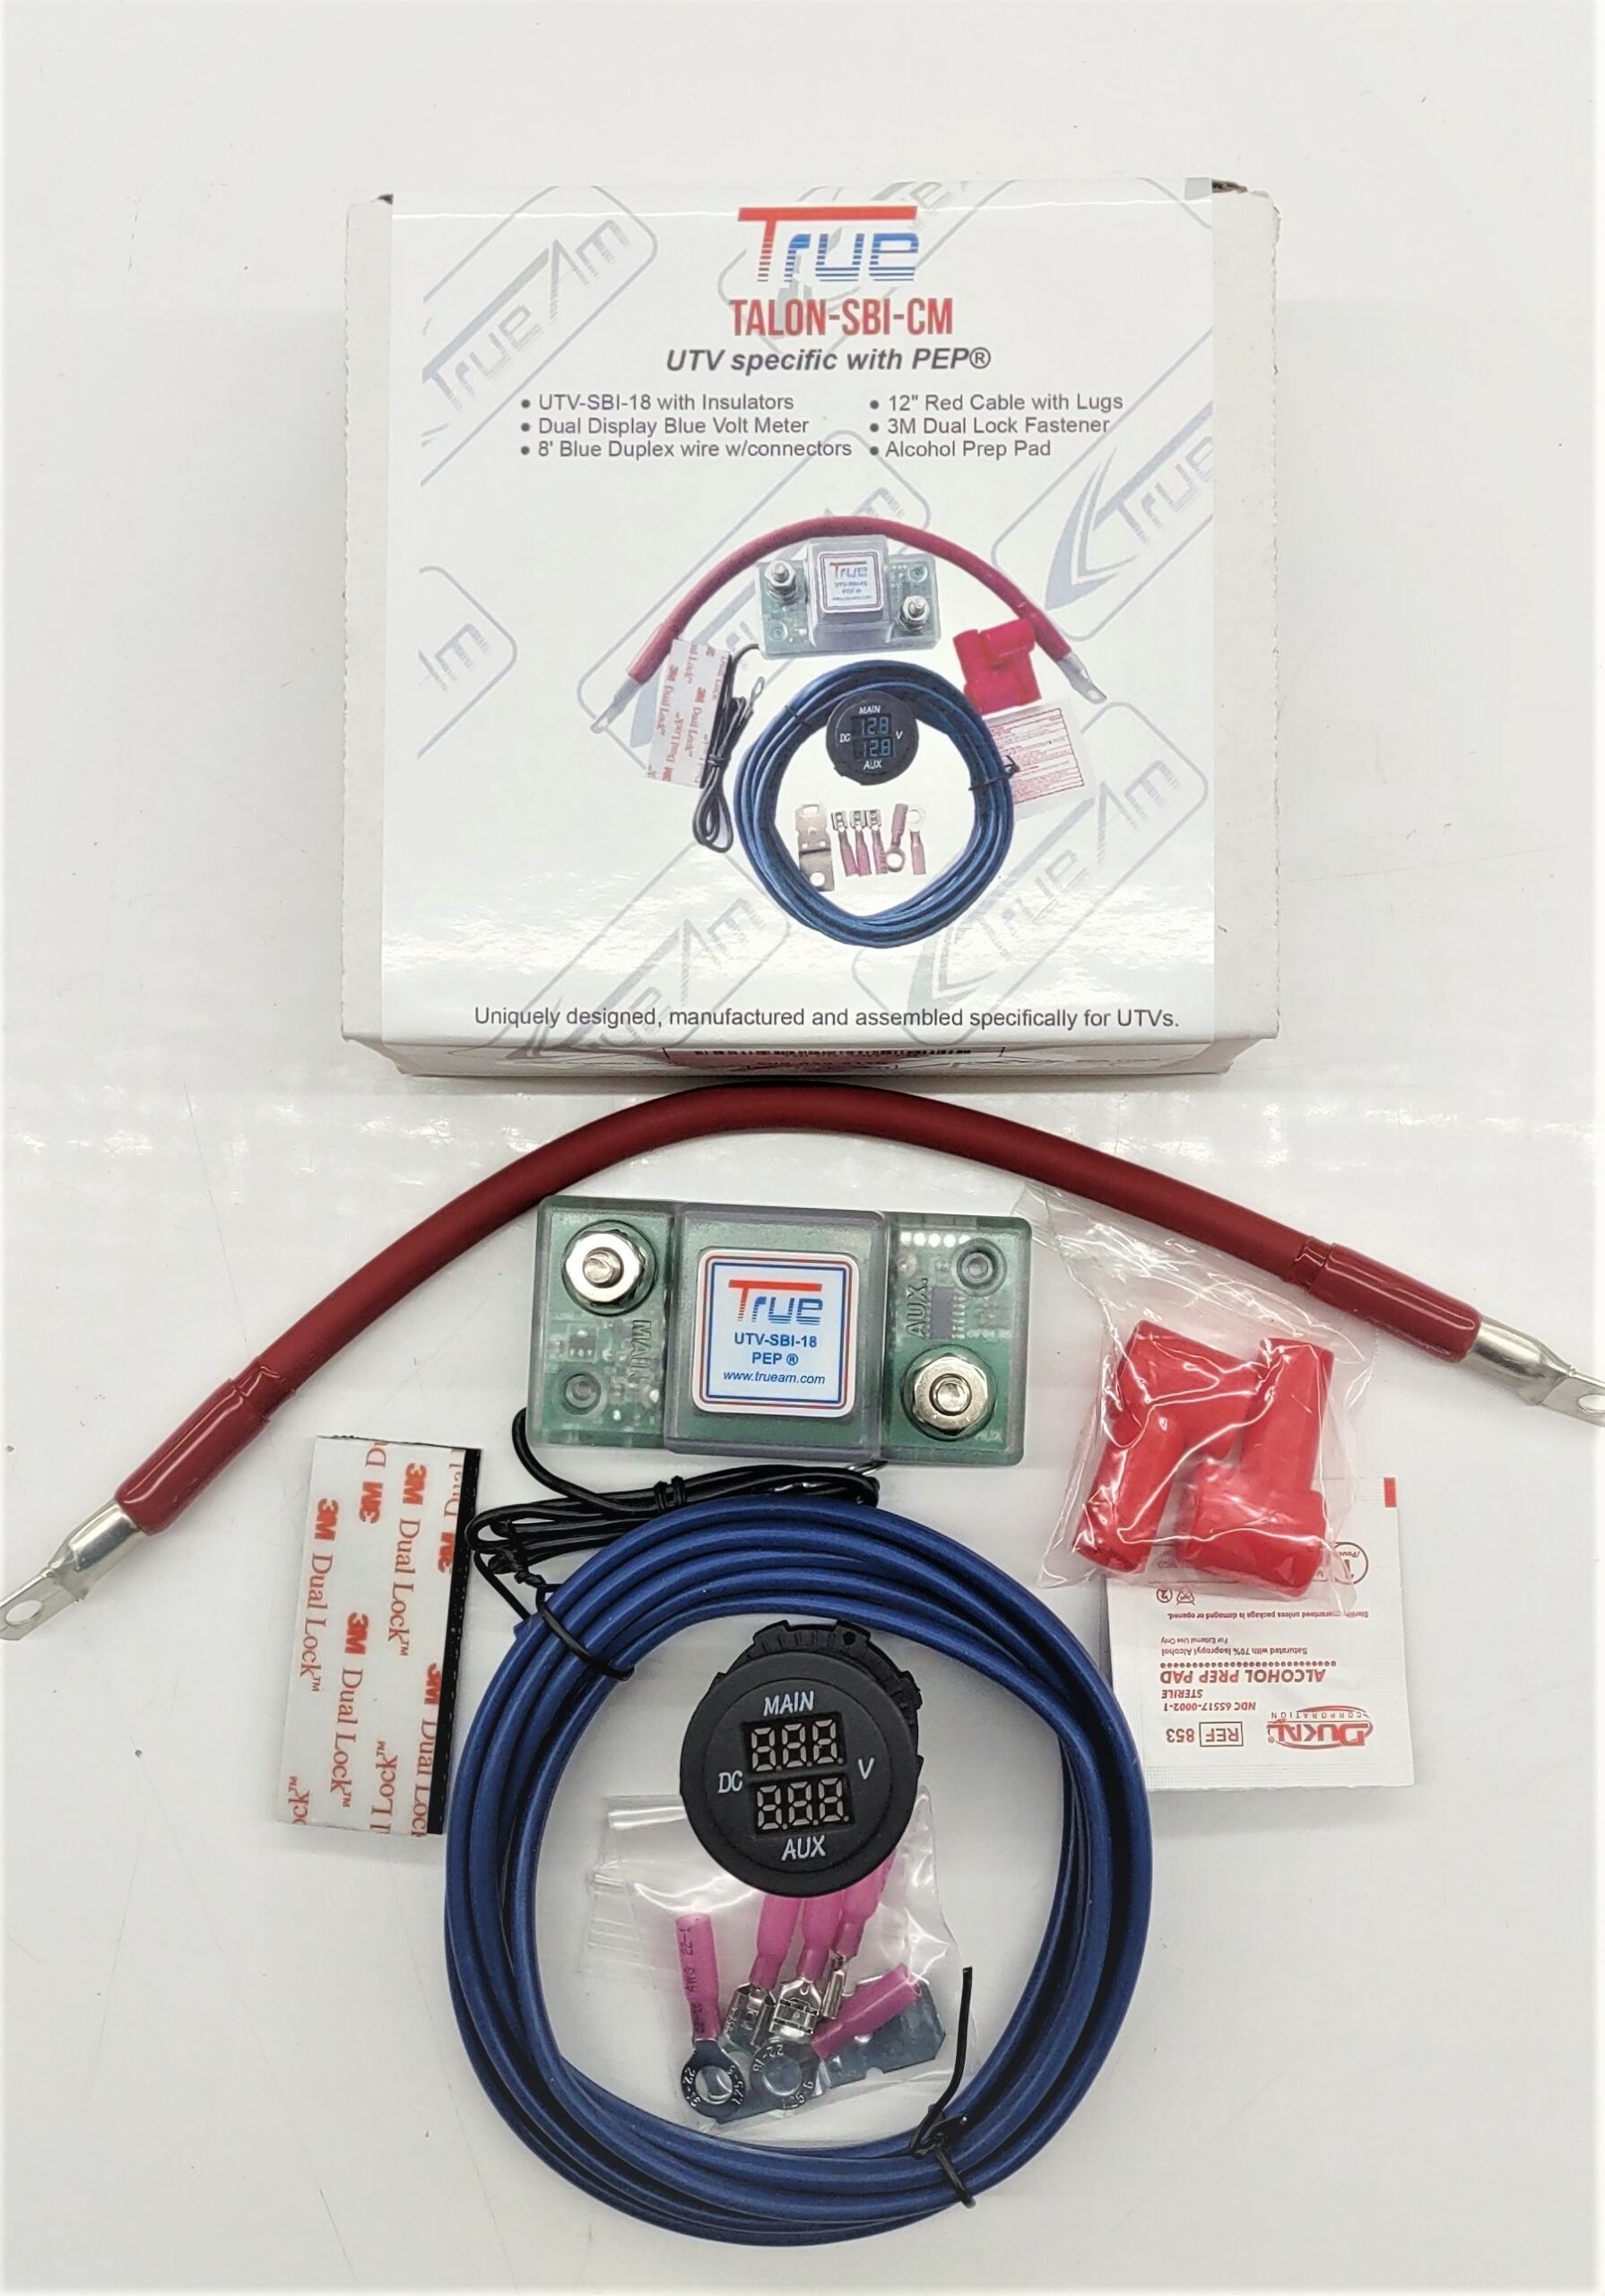 Dual Battery Volt Meter plus wiring kit. - The Honda SxS Club